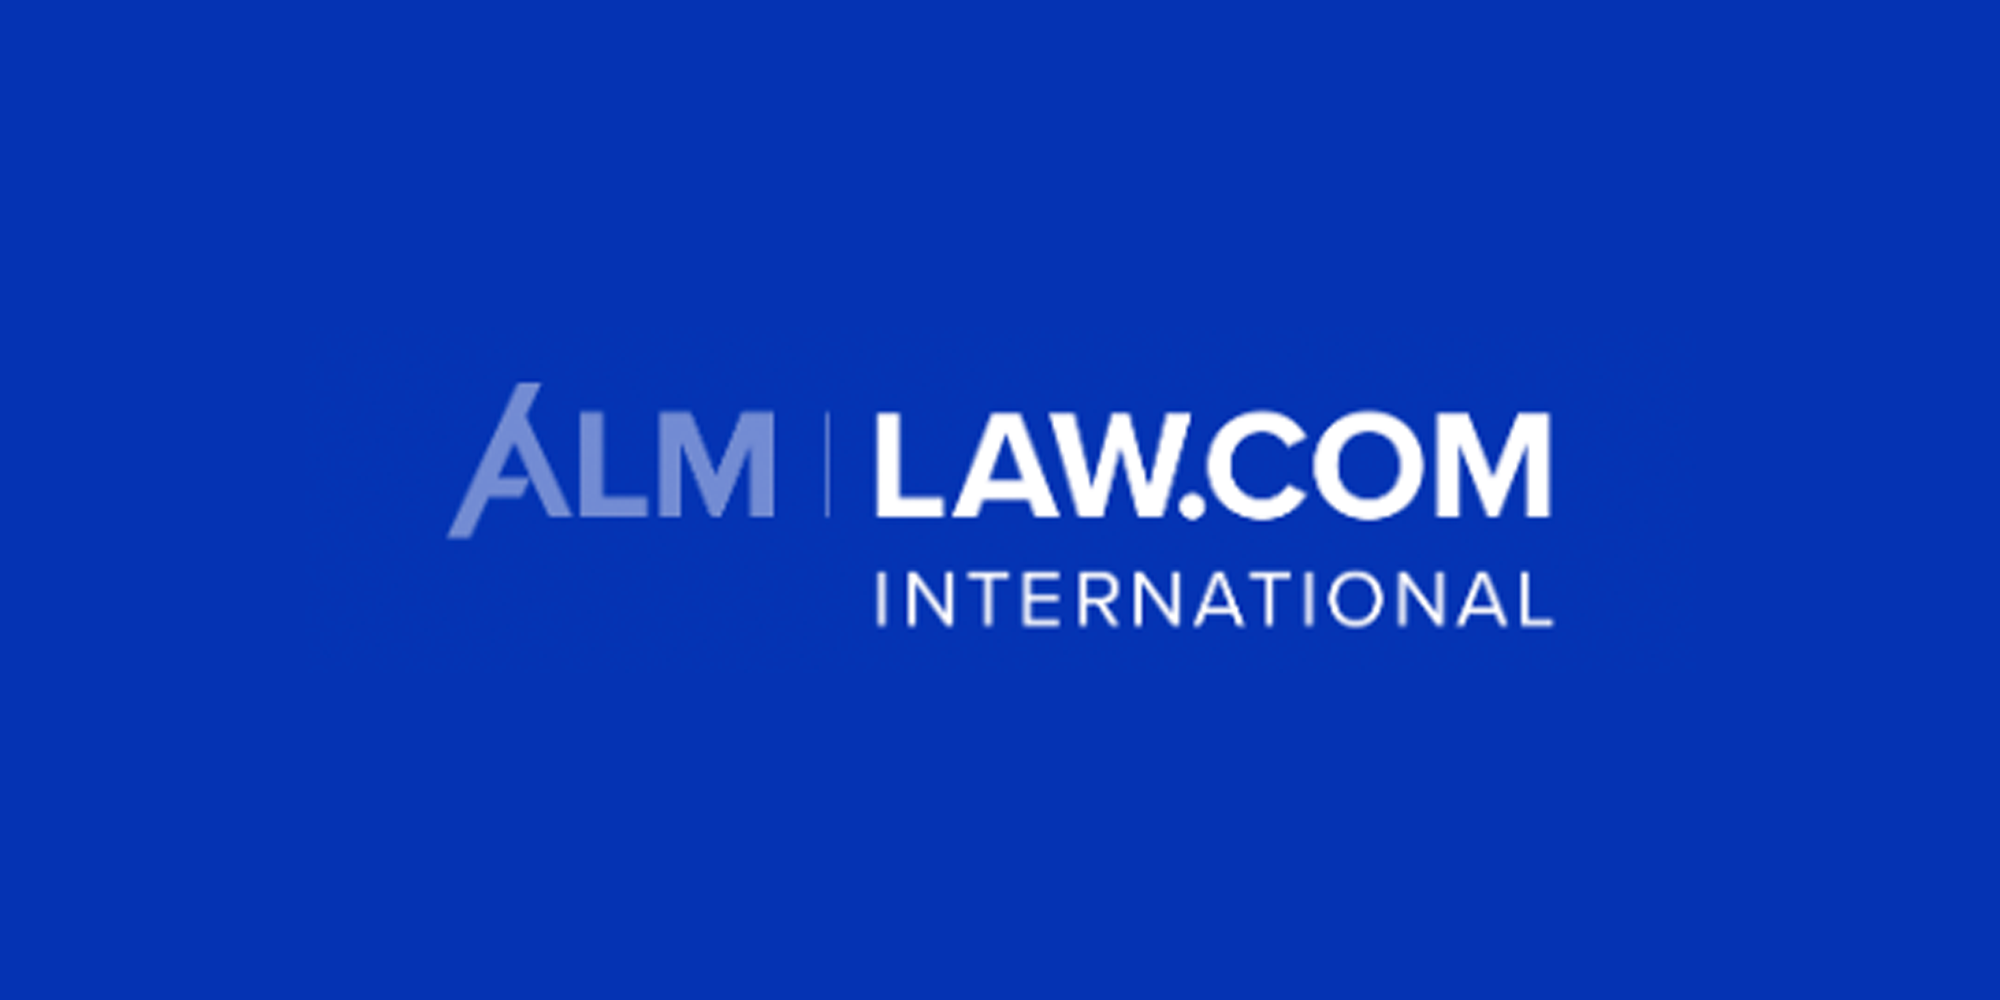 Law.com International